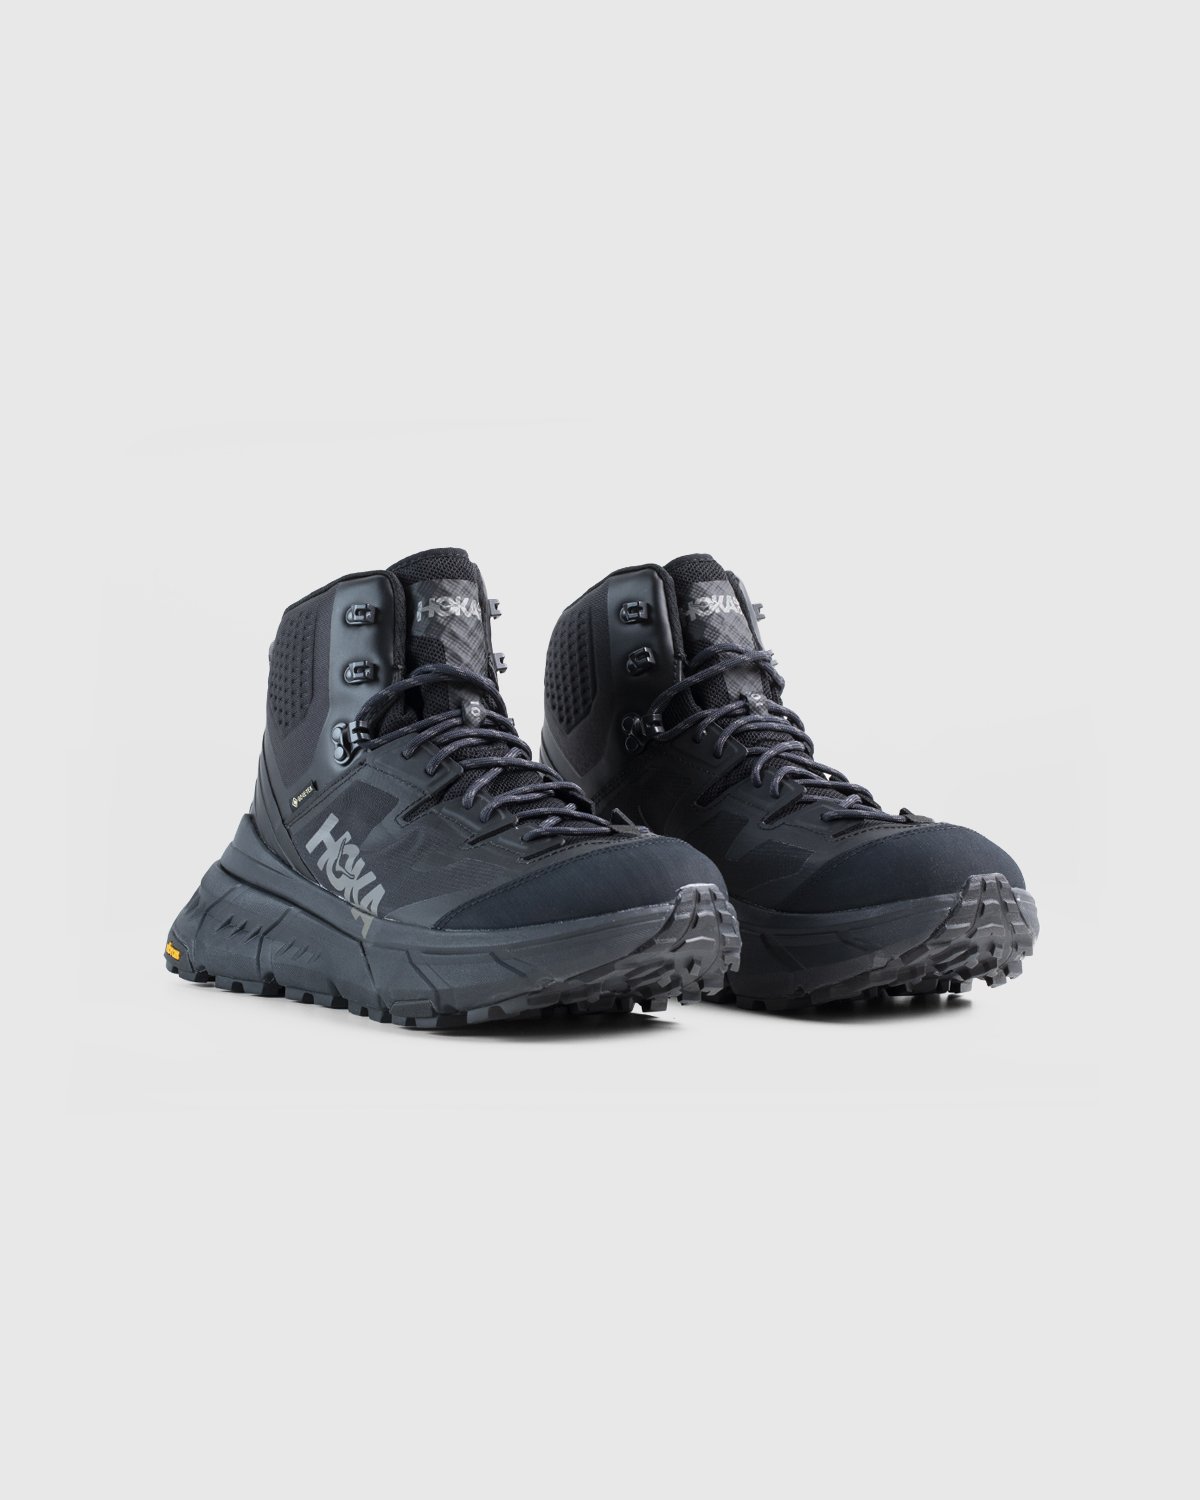 HOKA - M Tennine Hike GTX Black Dark Gull Grey - Footwear - Black - Image 3